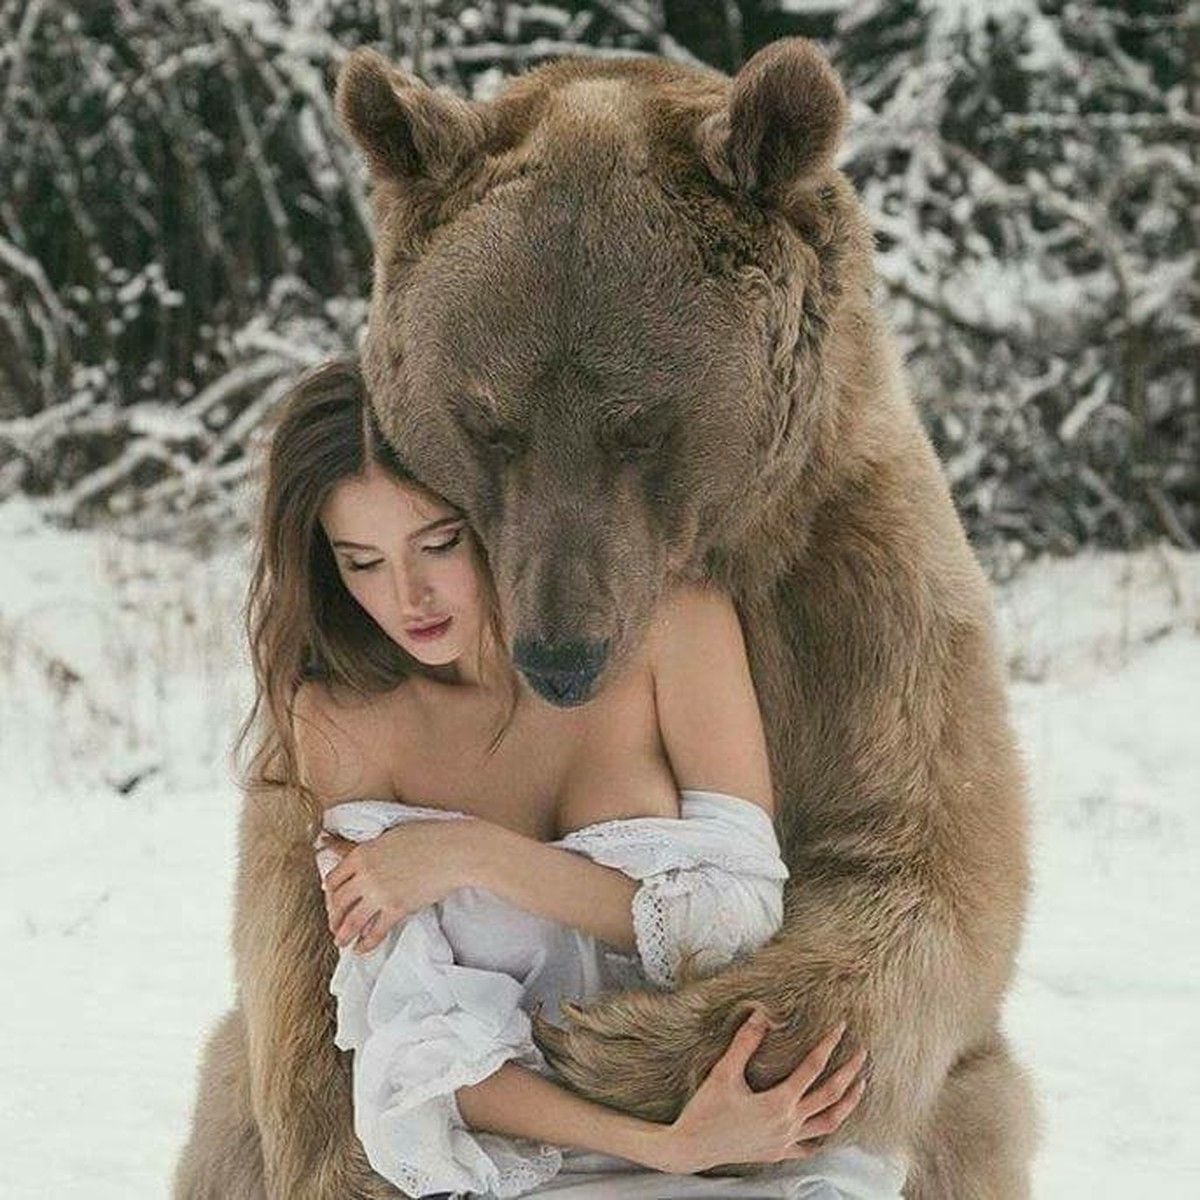 Na, I'm pretty sure the bear was raised by wacko environmentalists. 